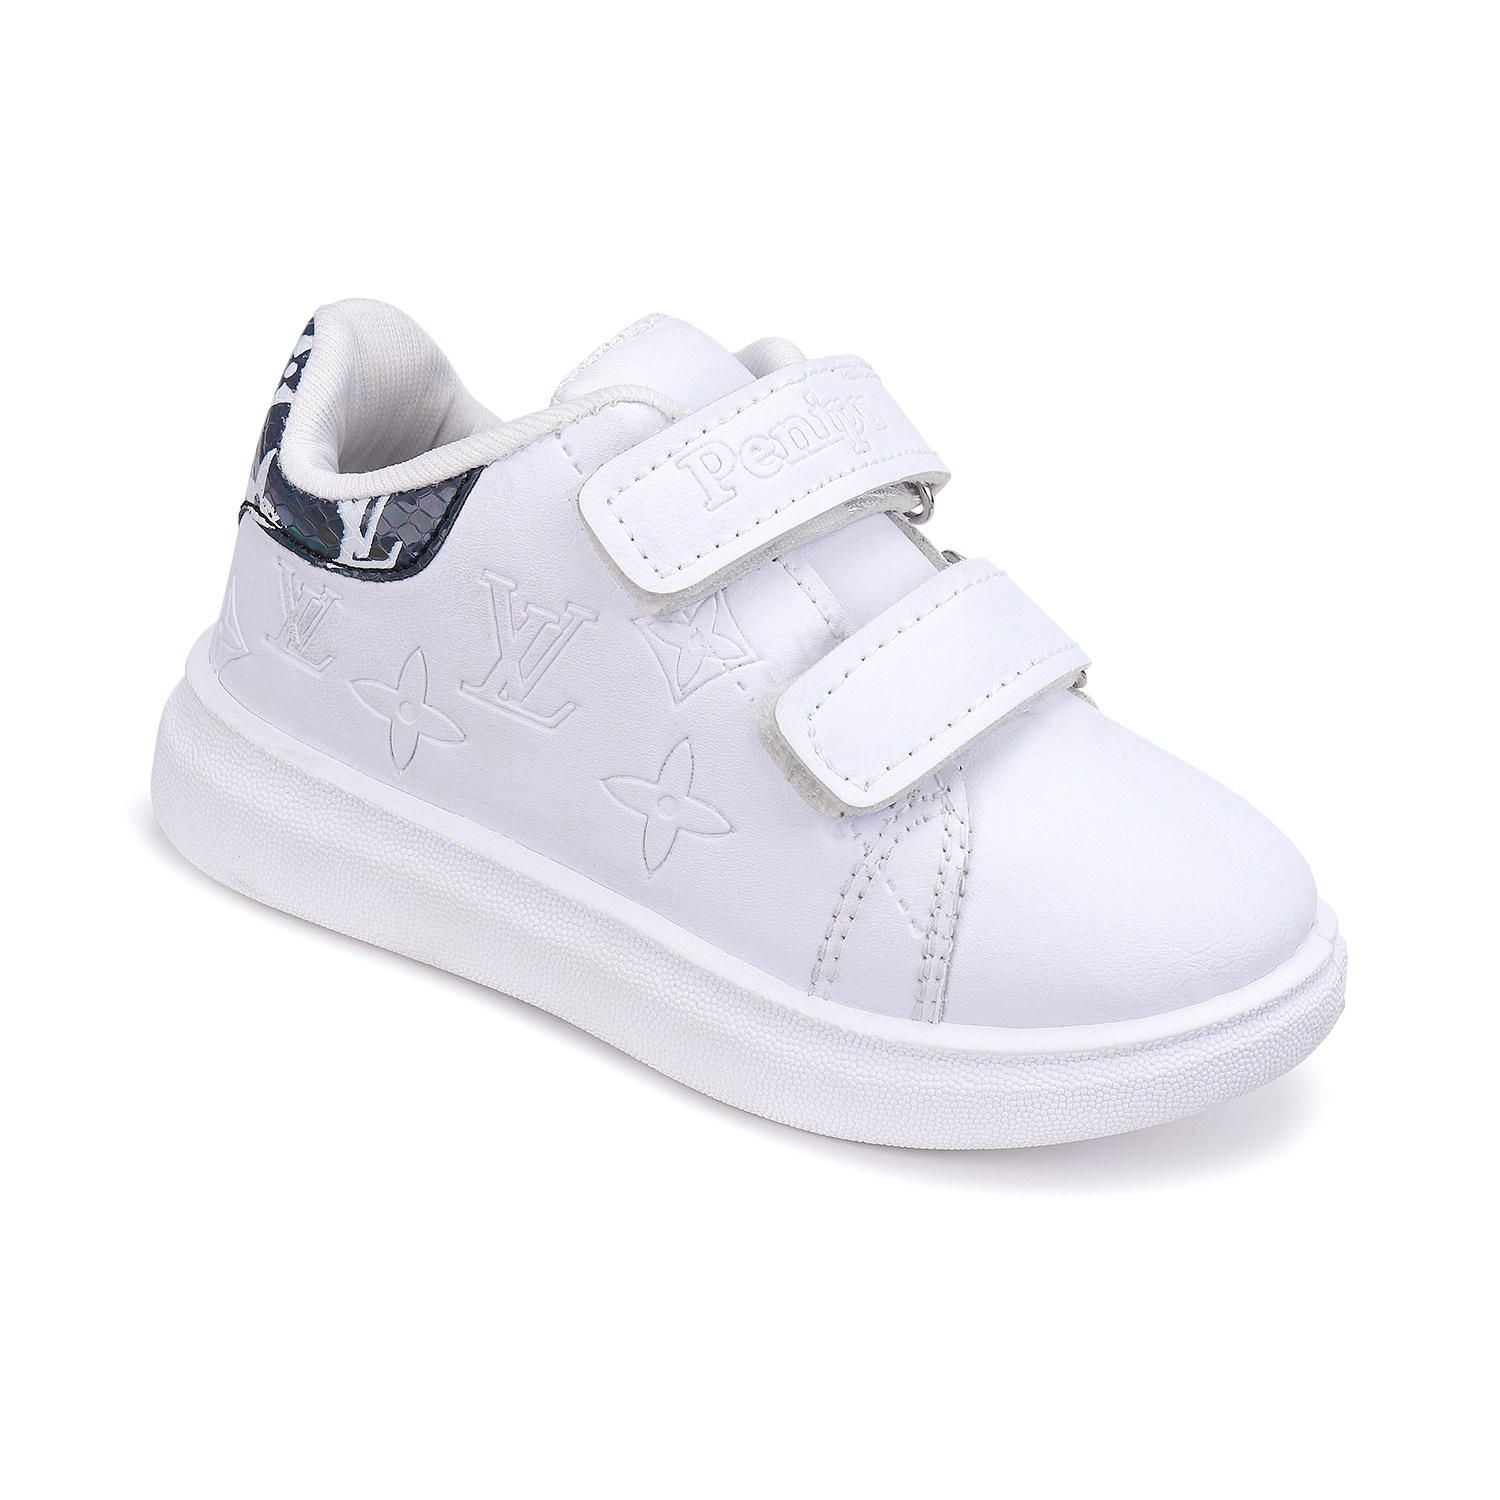 Camro Zara 2 White/Black Boys Sneakers